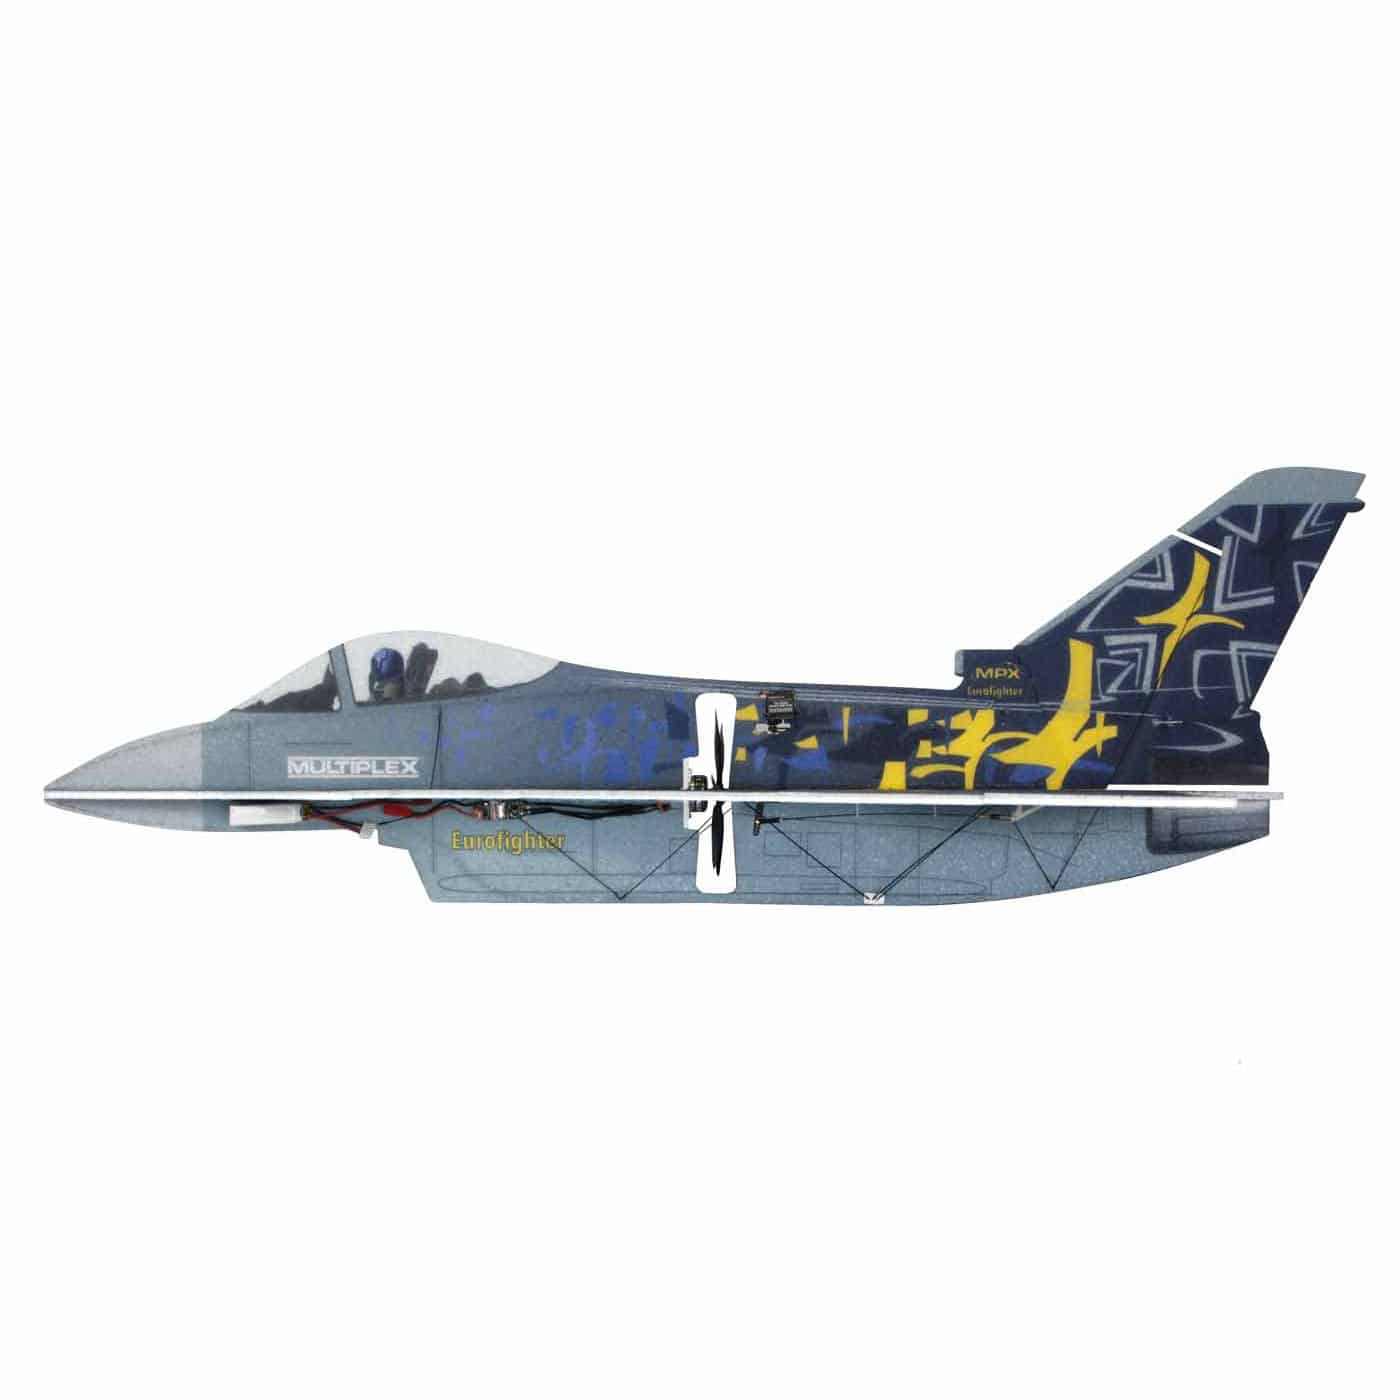 MULTIPLEX Bk Eurofighter Indoor MODELL for sale online 